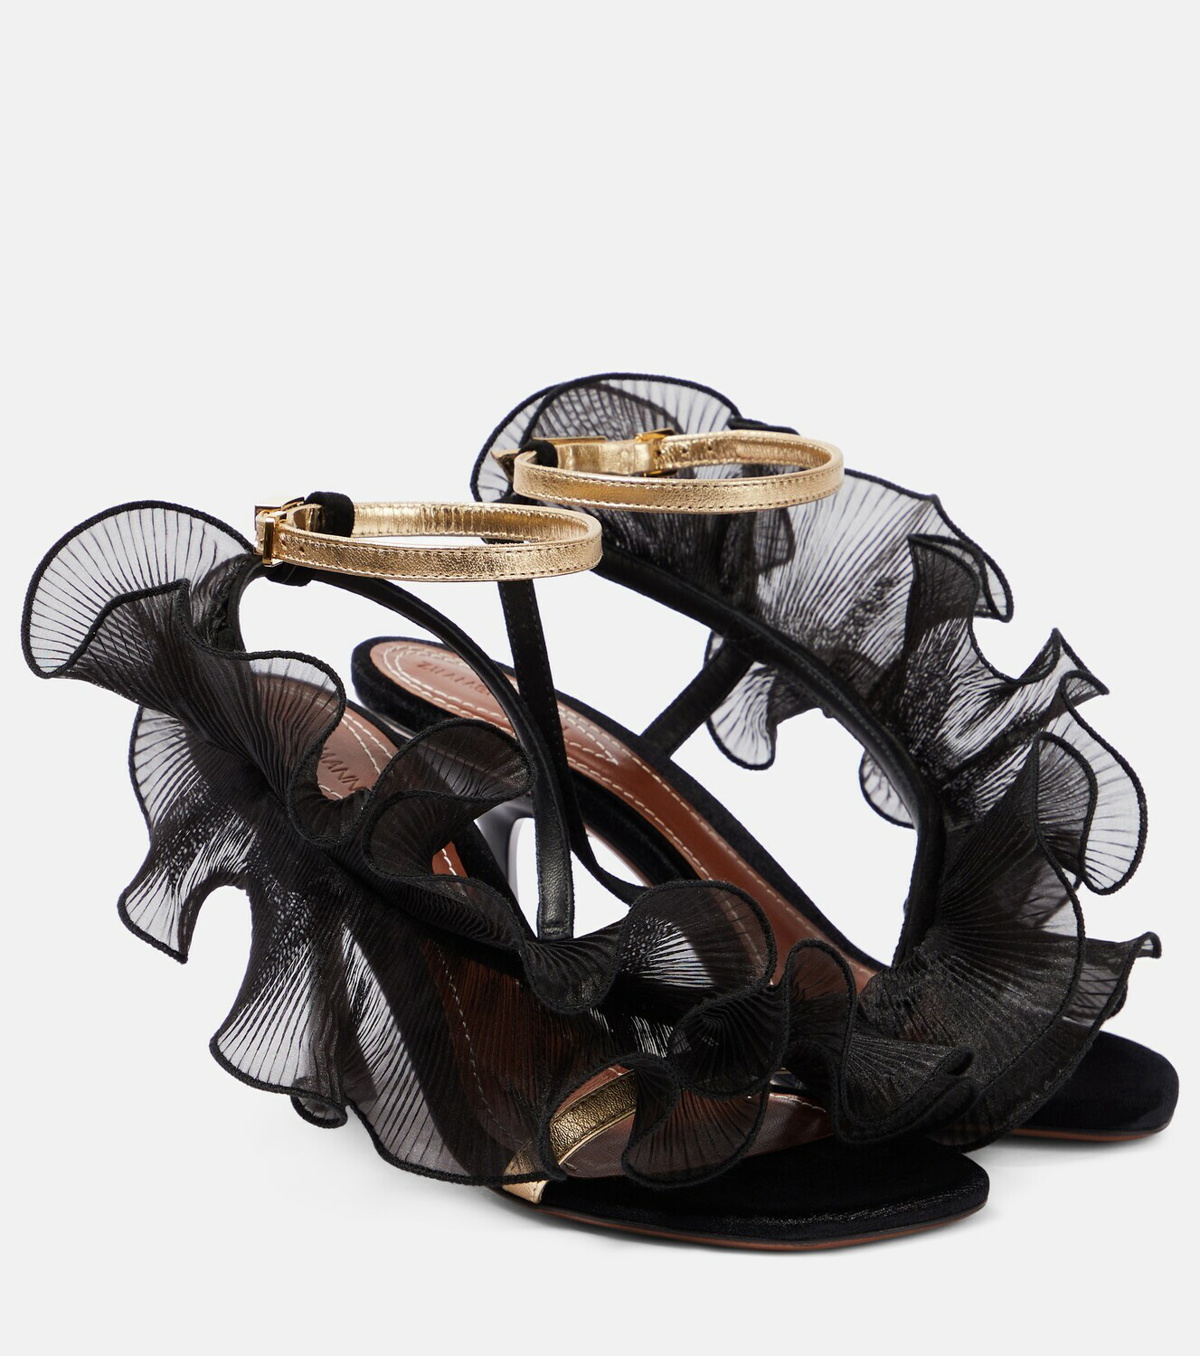 Leather Sandals in Black - Zimmermann